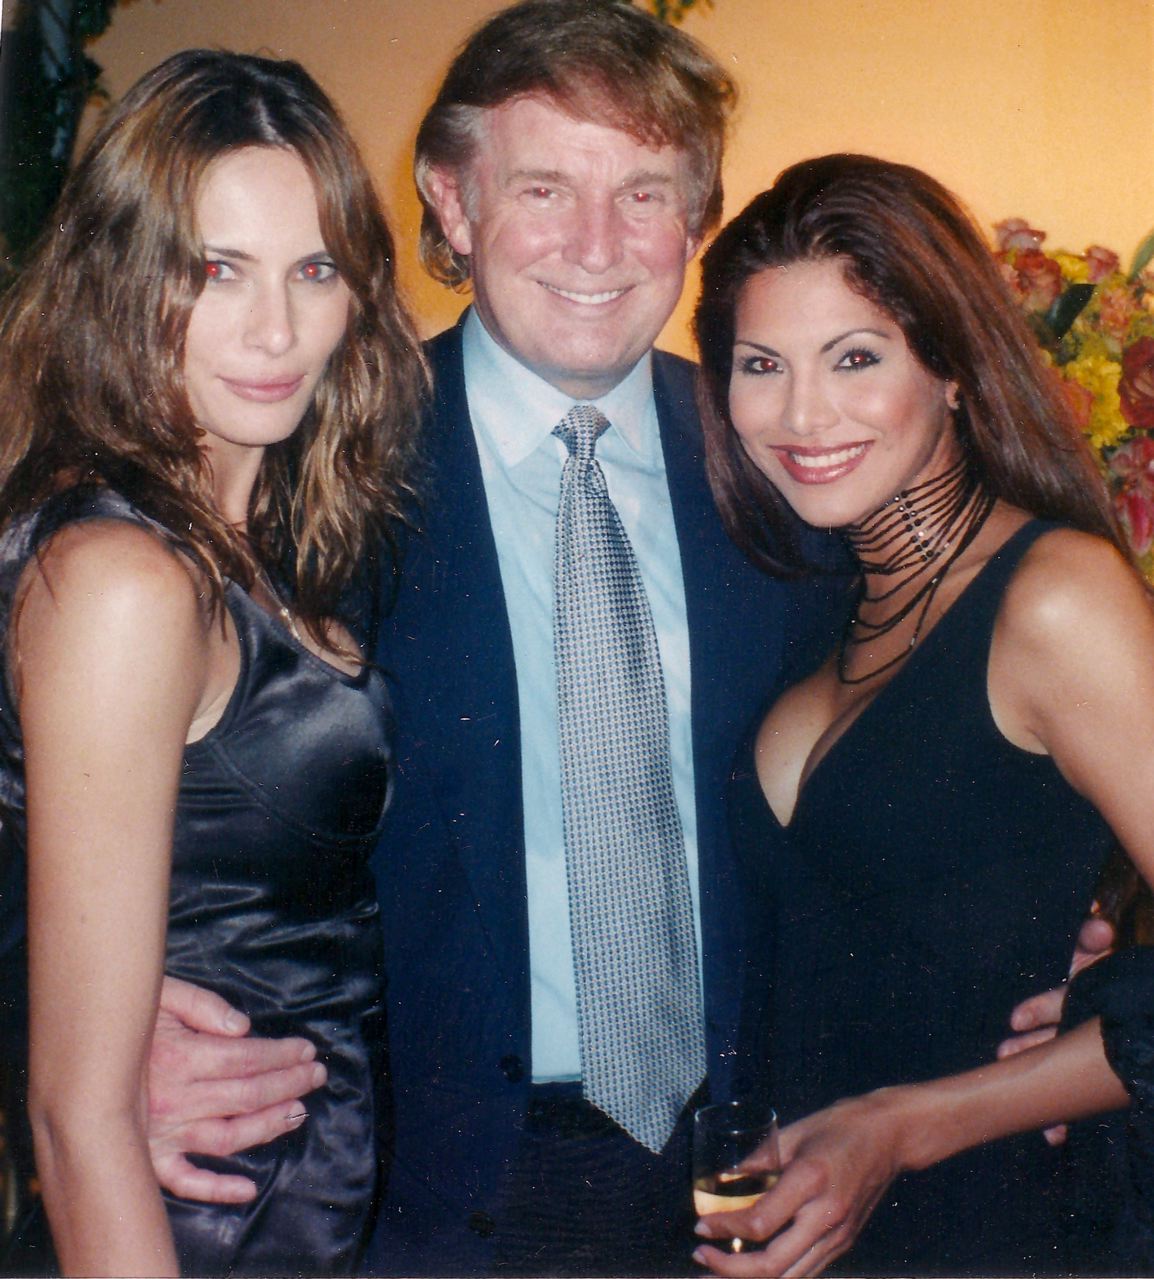 Joyce Giraud (r) with Melania Trump and Donald Trump